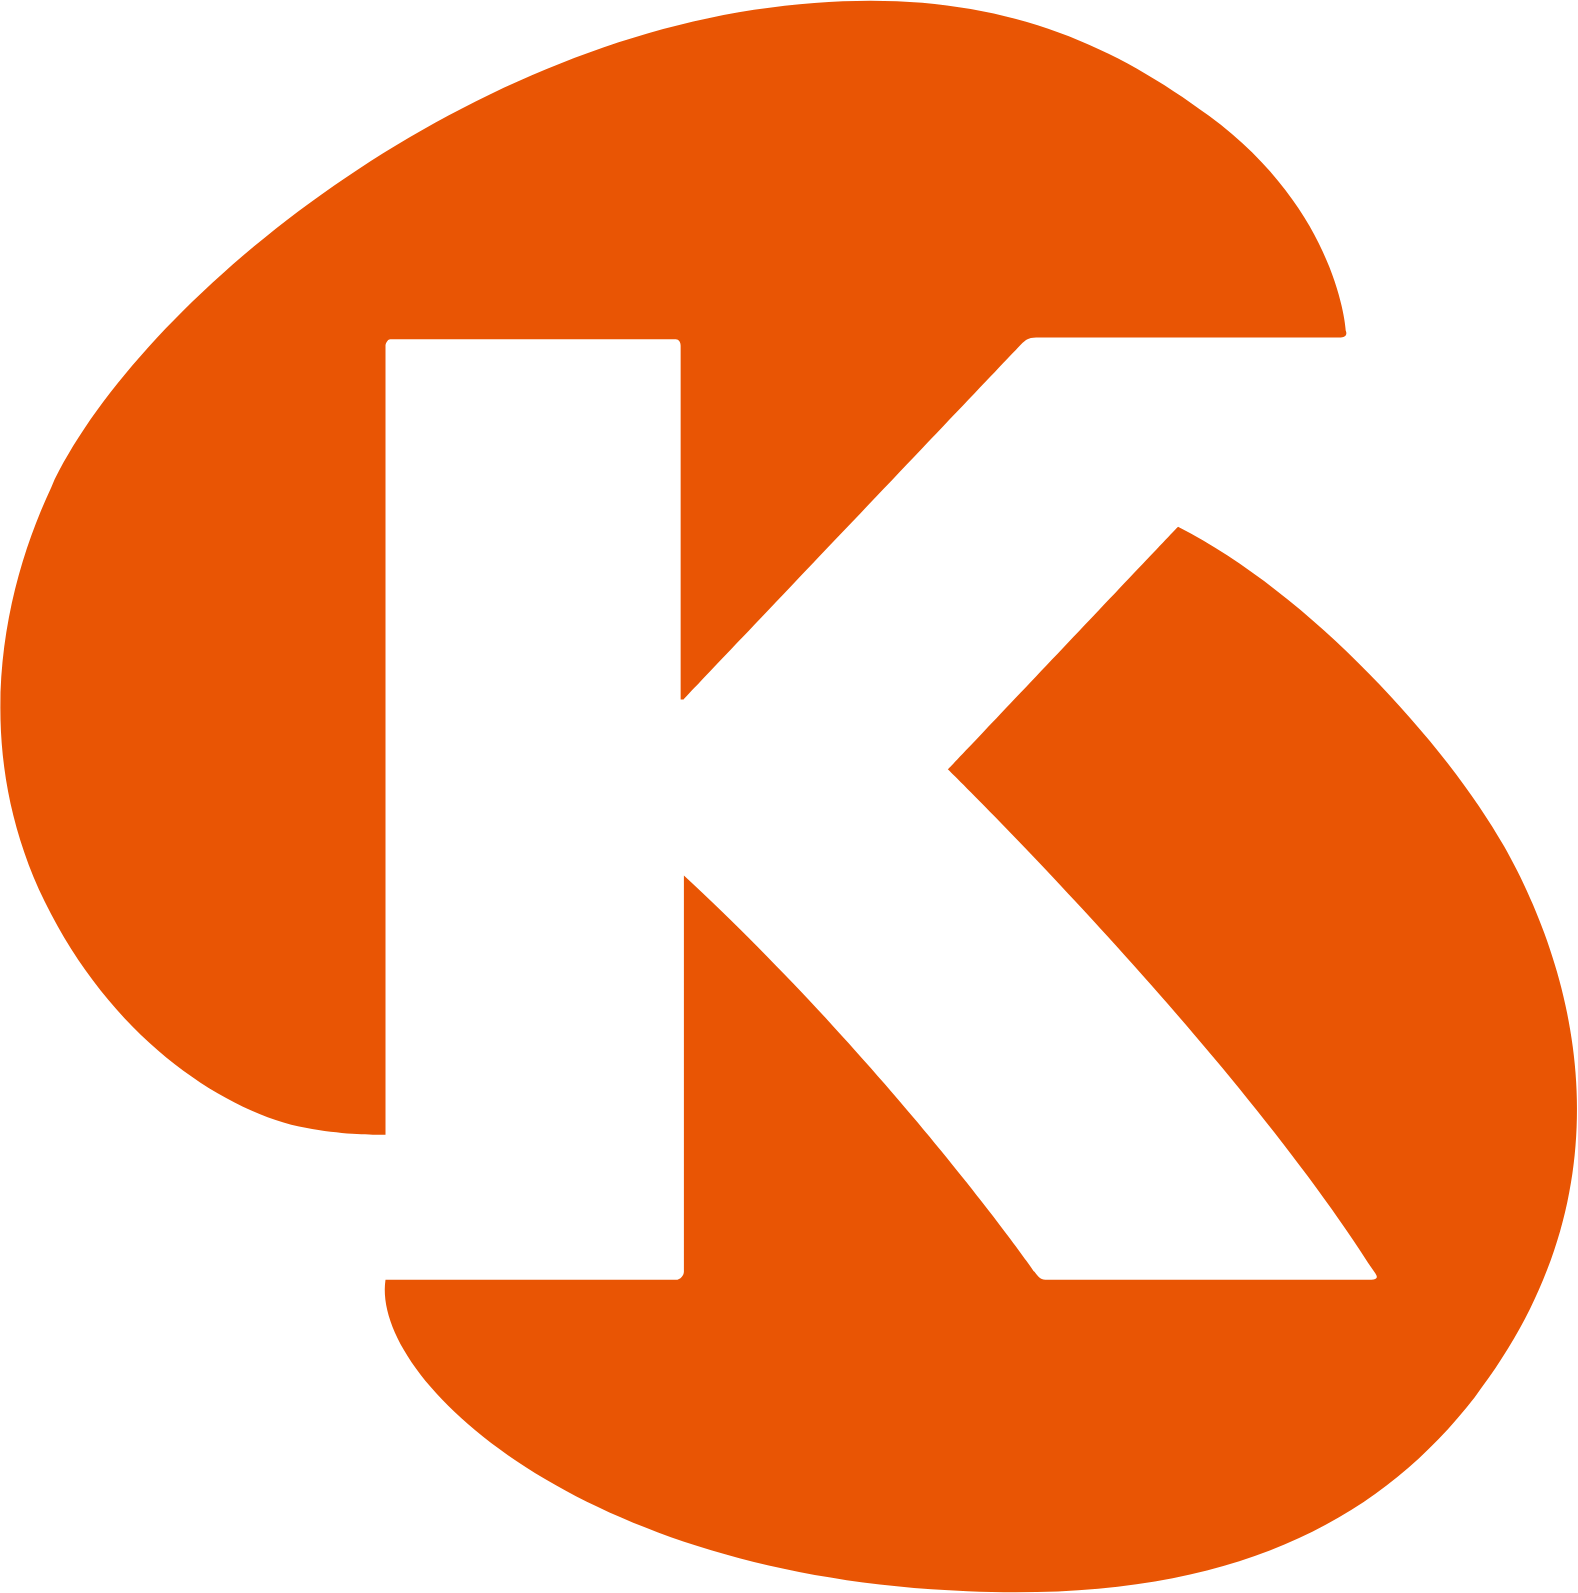 kyowa Kirin logo (PNG transparent)